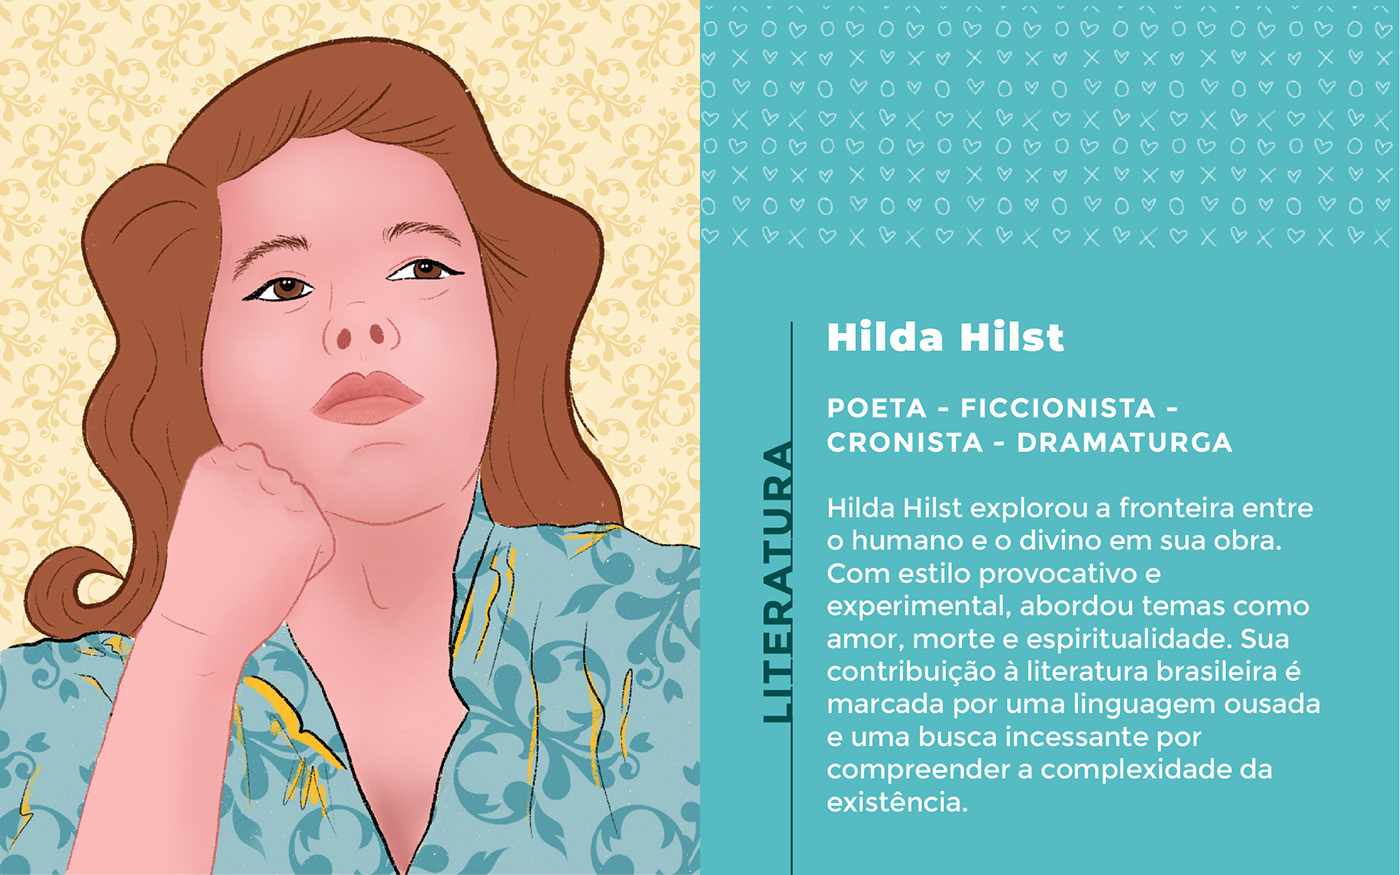 An illustrated portrait of Hilda Hilst a brazilian poet.